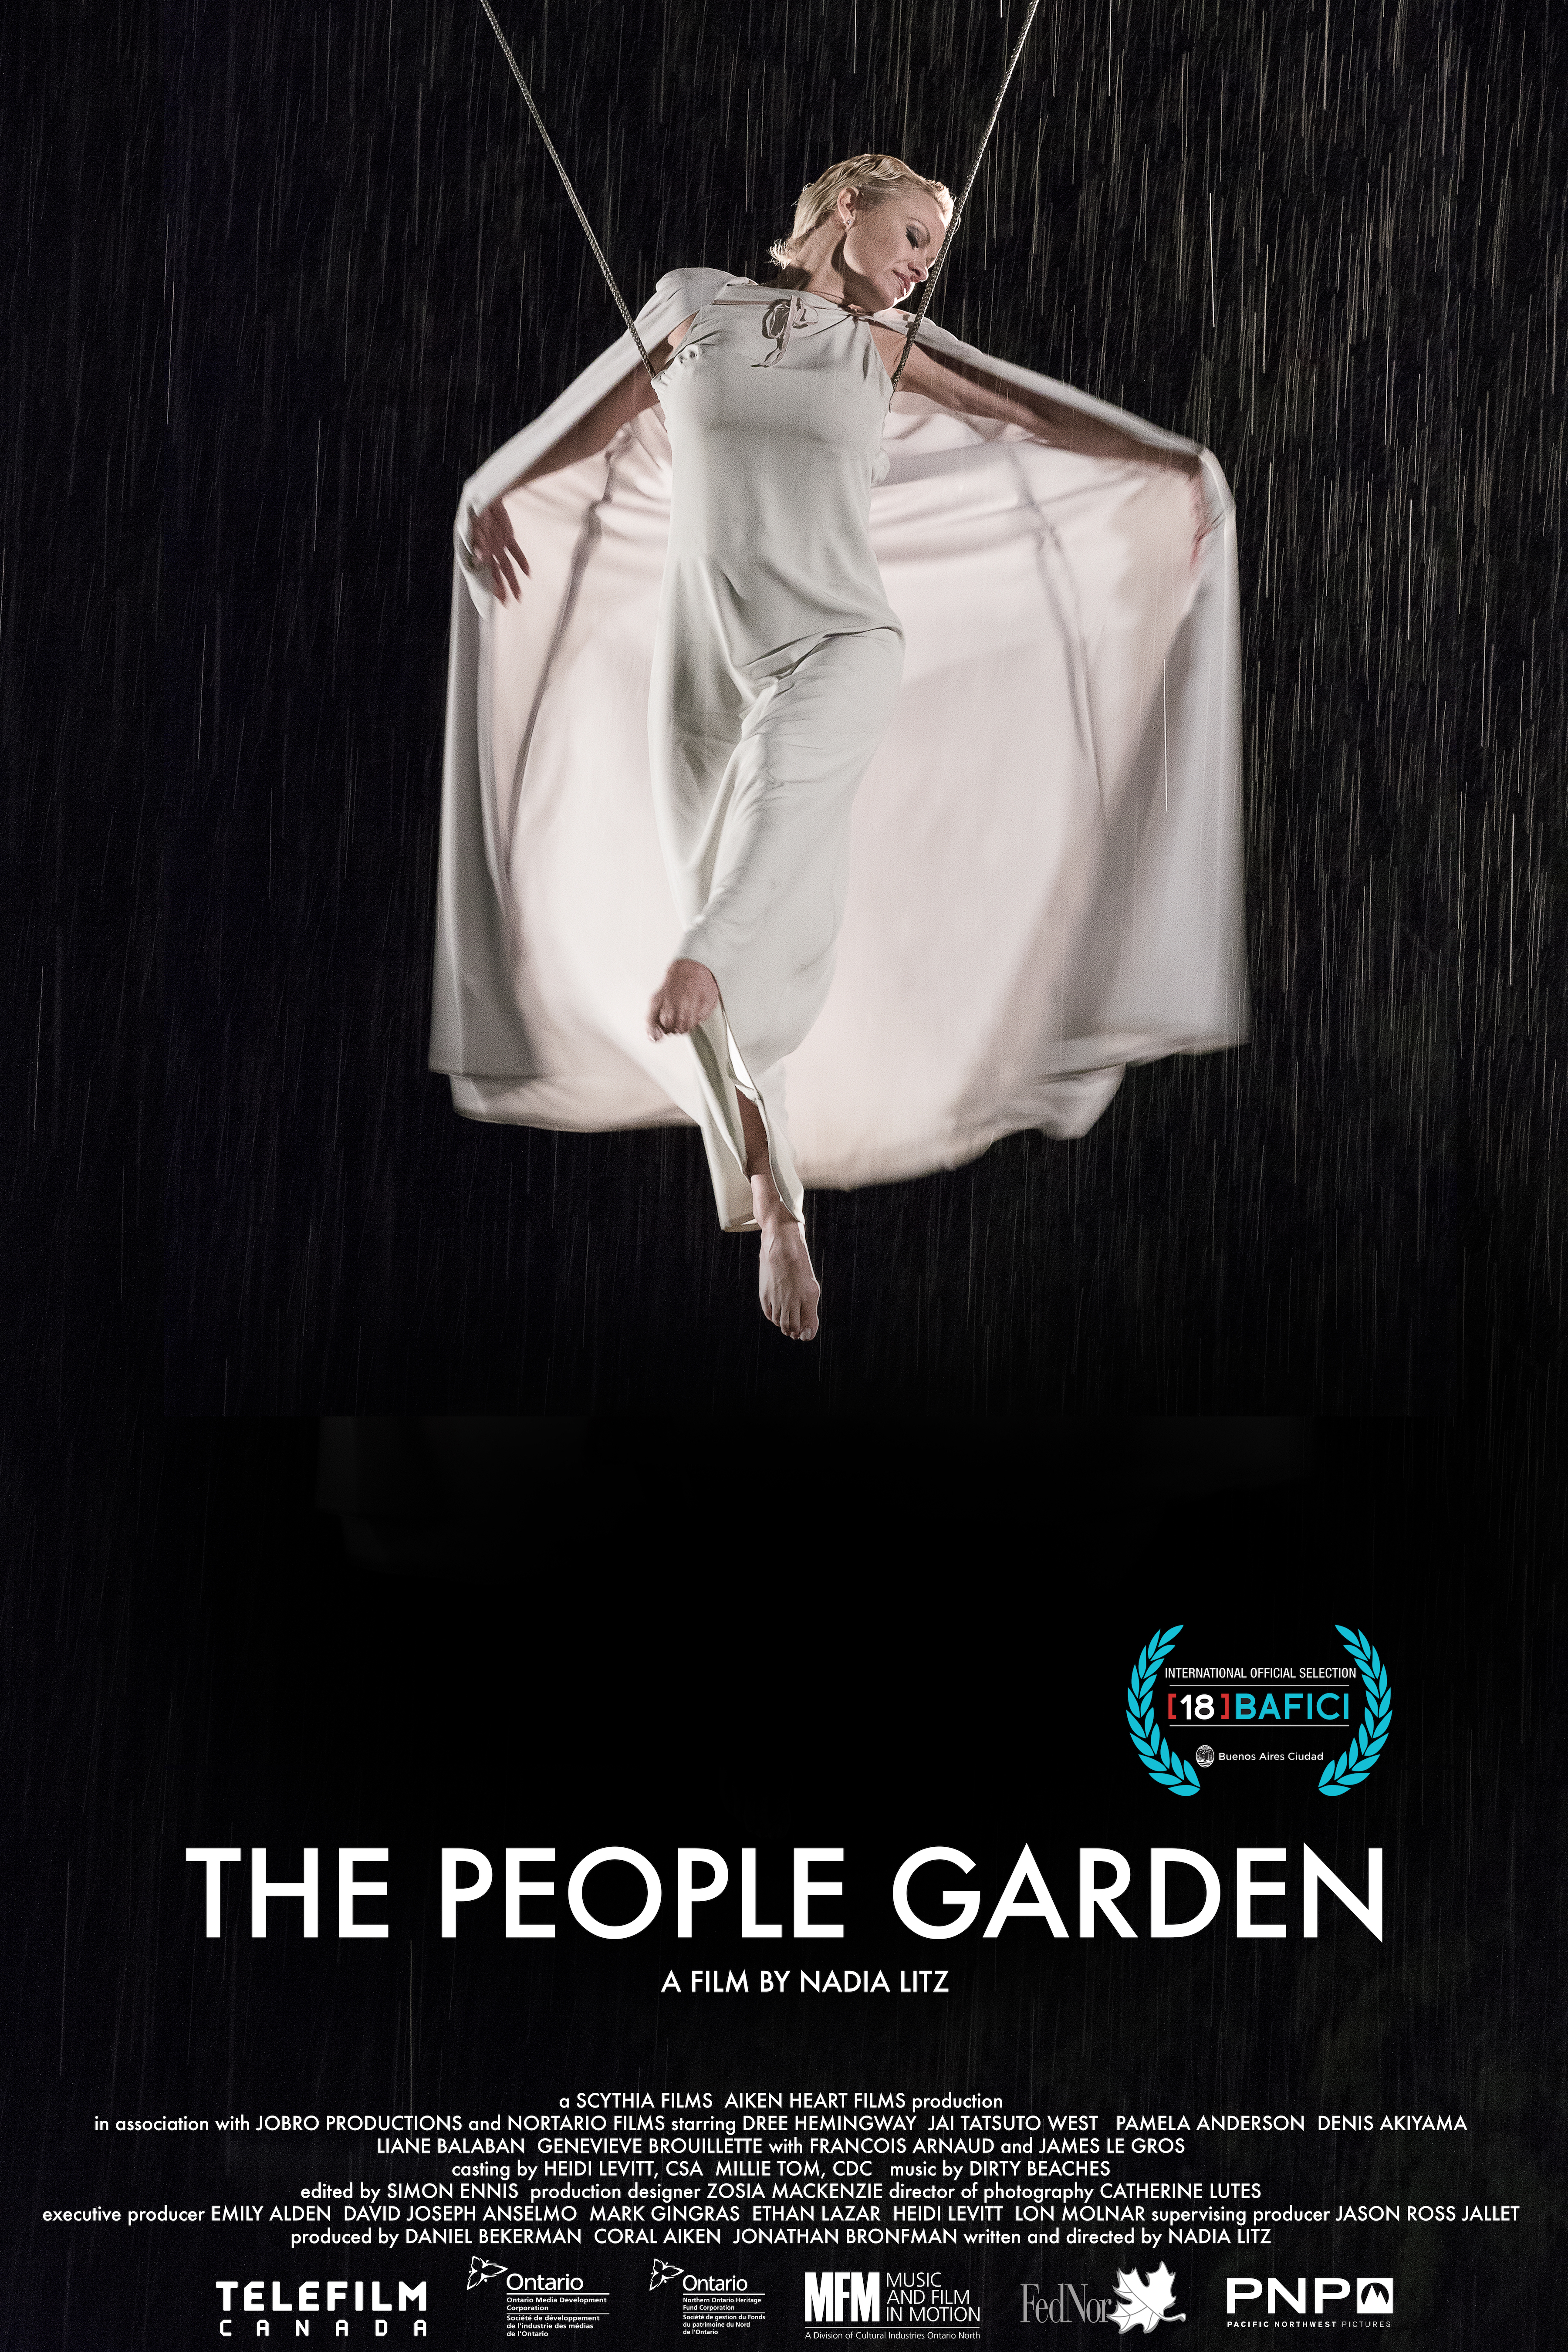 Nonton film The People Garden layarkaca21 indoxx1 ganool online streaming terbaru